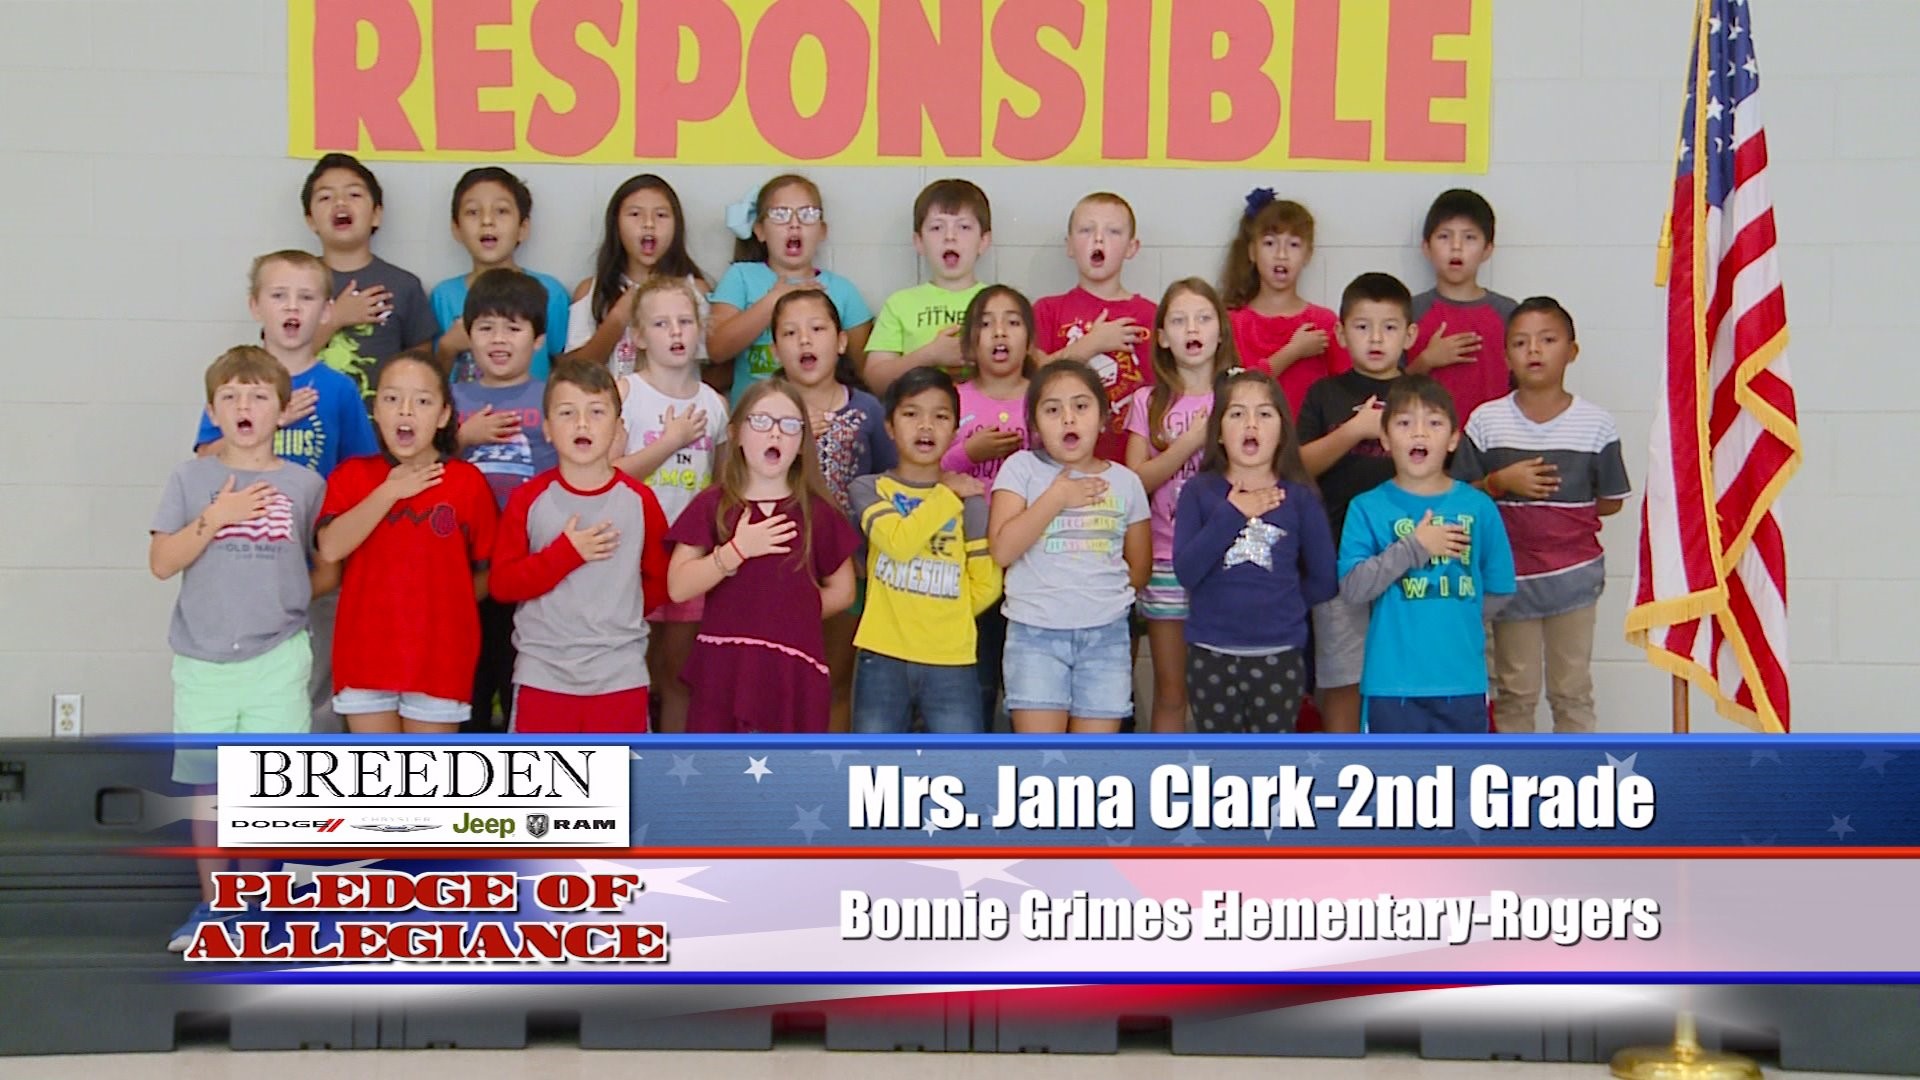 Mrs. Jana Clark  2nd Grade Bonnie Grimes Elementary, Rogers